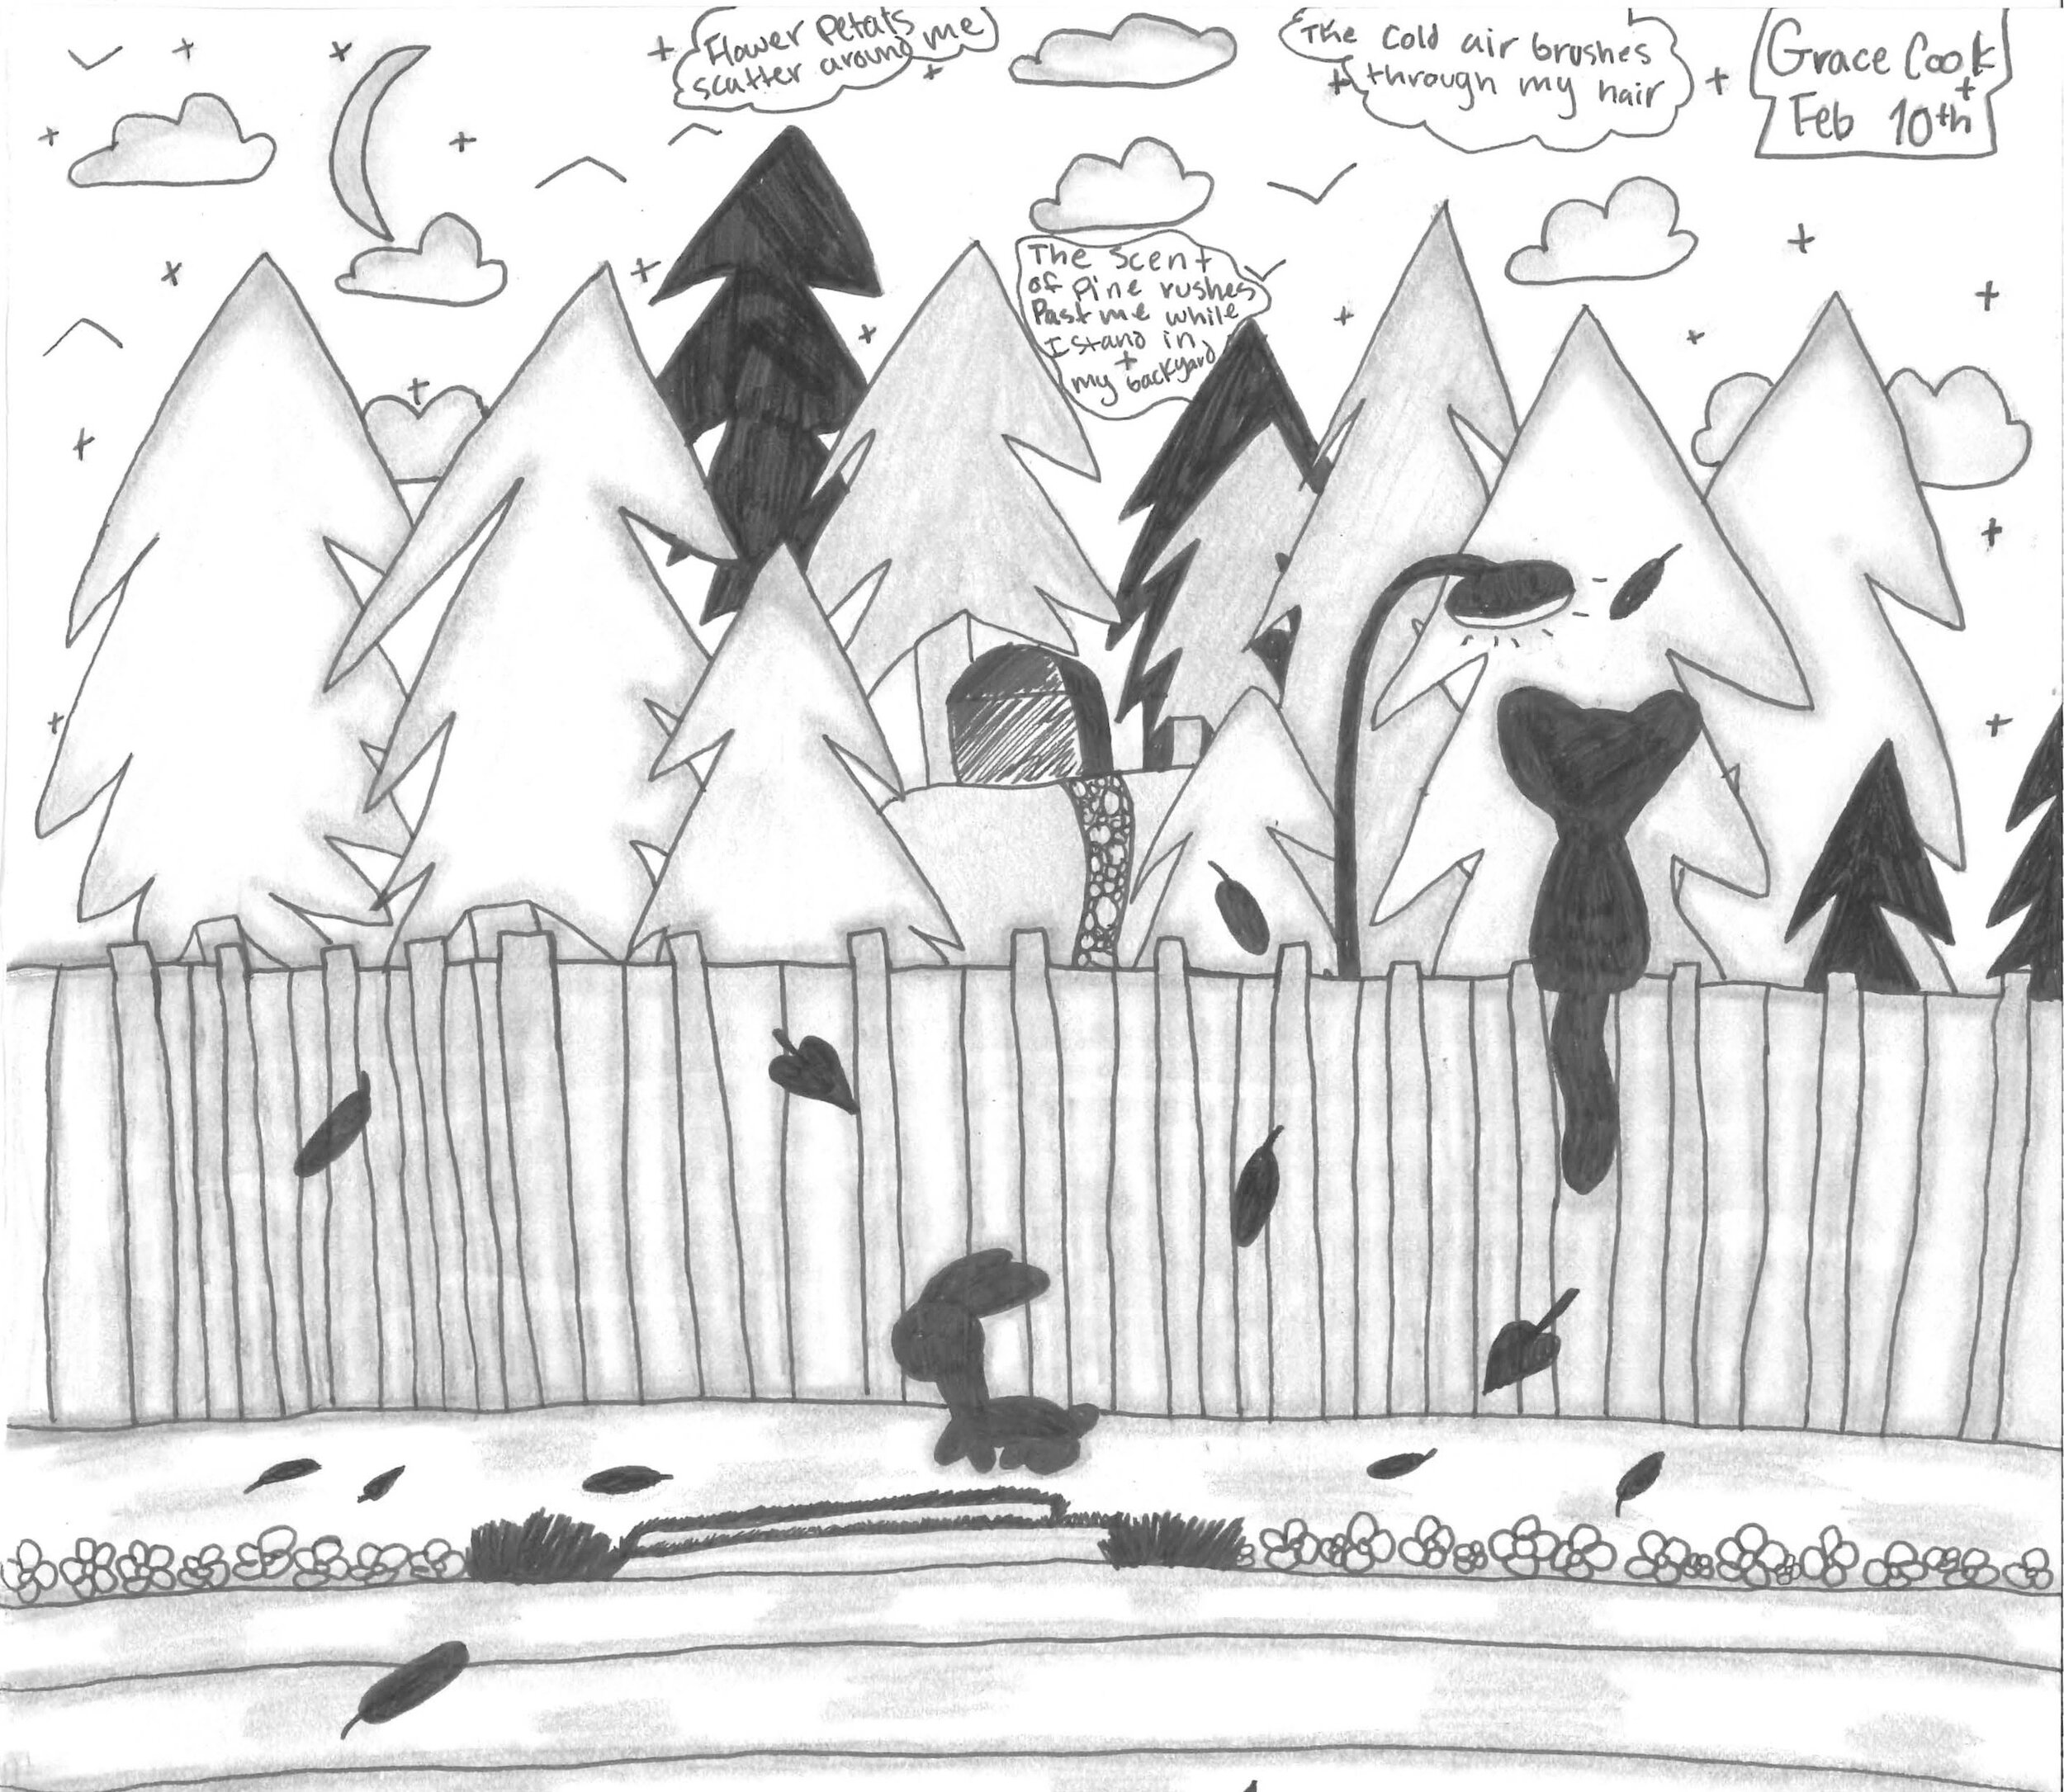 Backyard Heaven by Grace Cook - 2nd Place - Grades 6-8